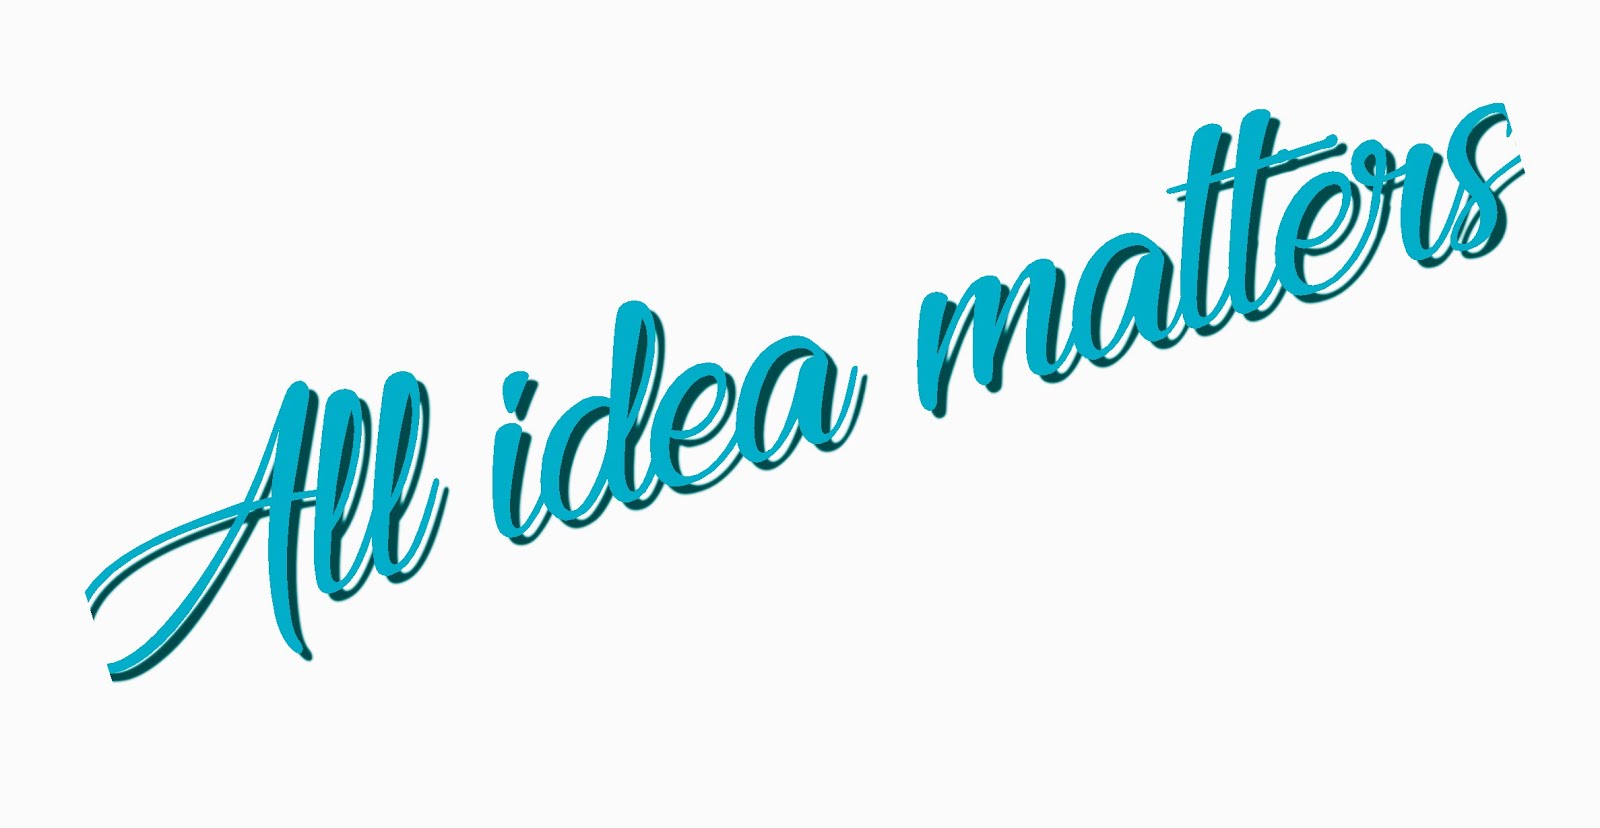 All idea matters